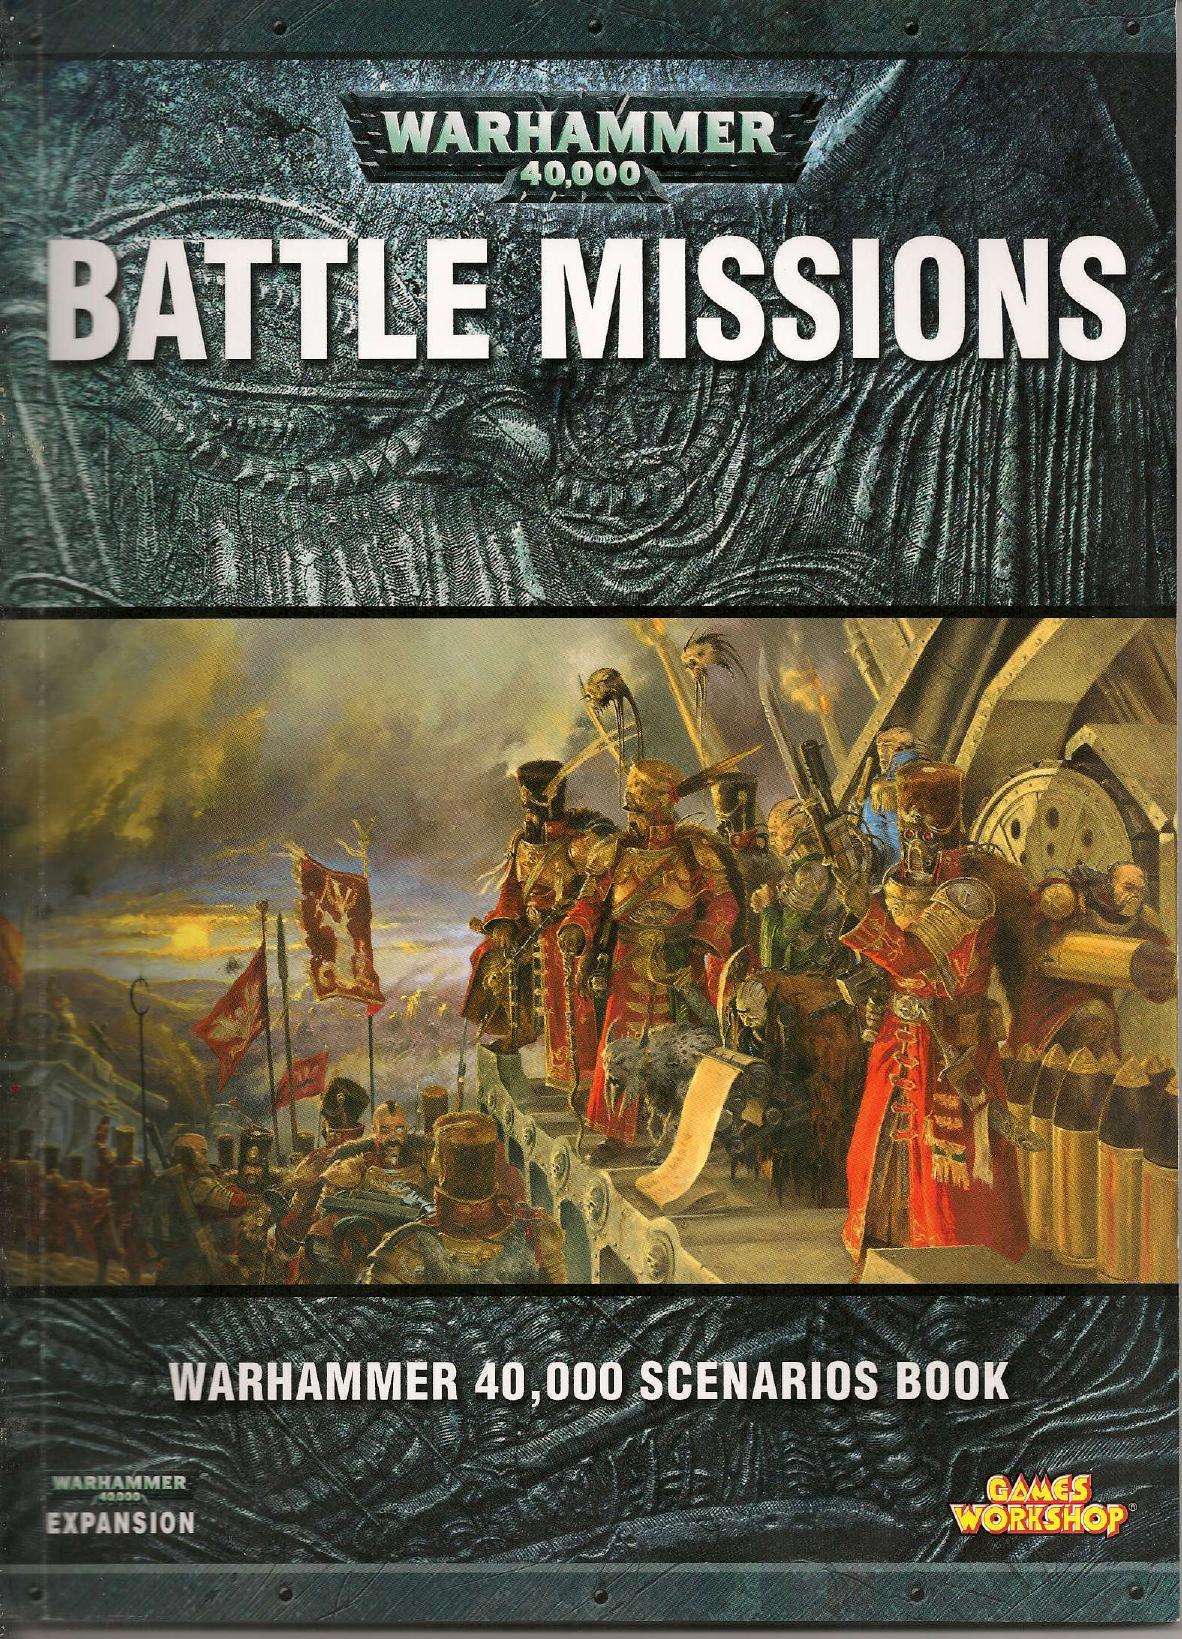 Battle Missions